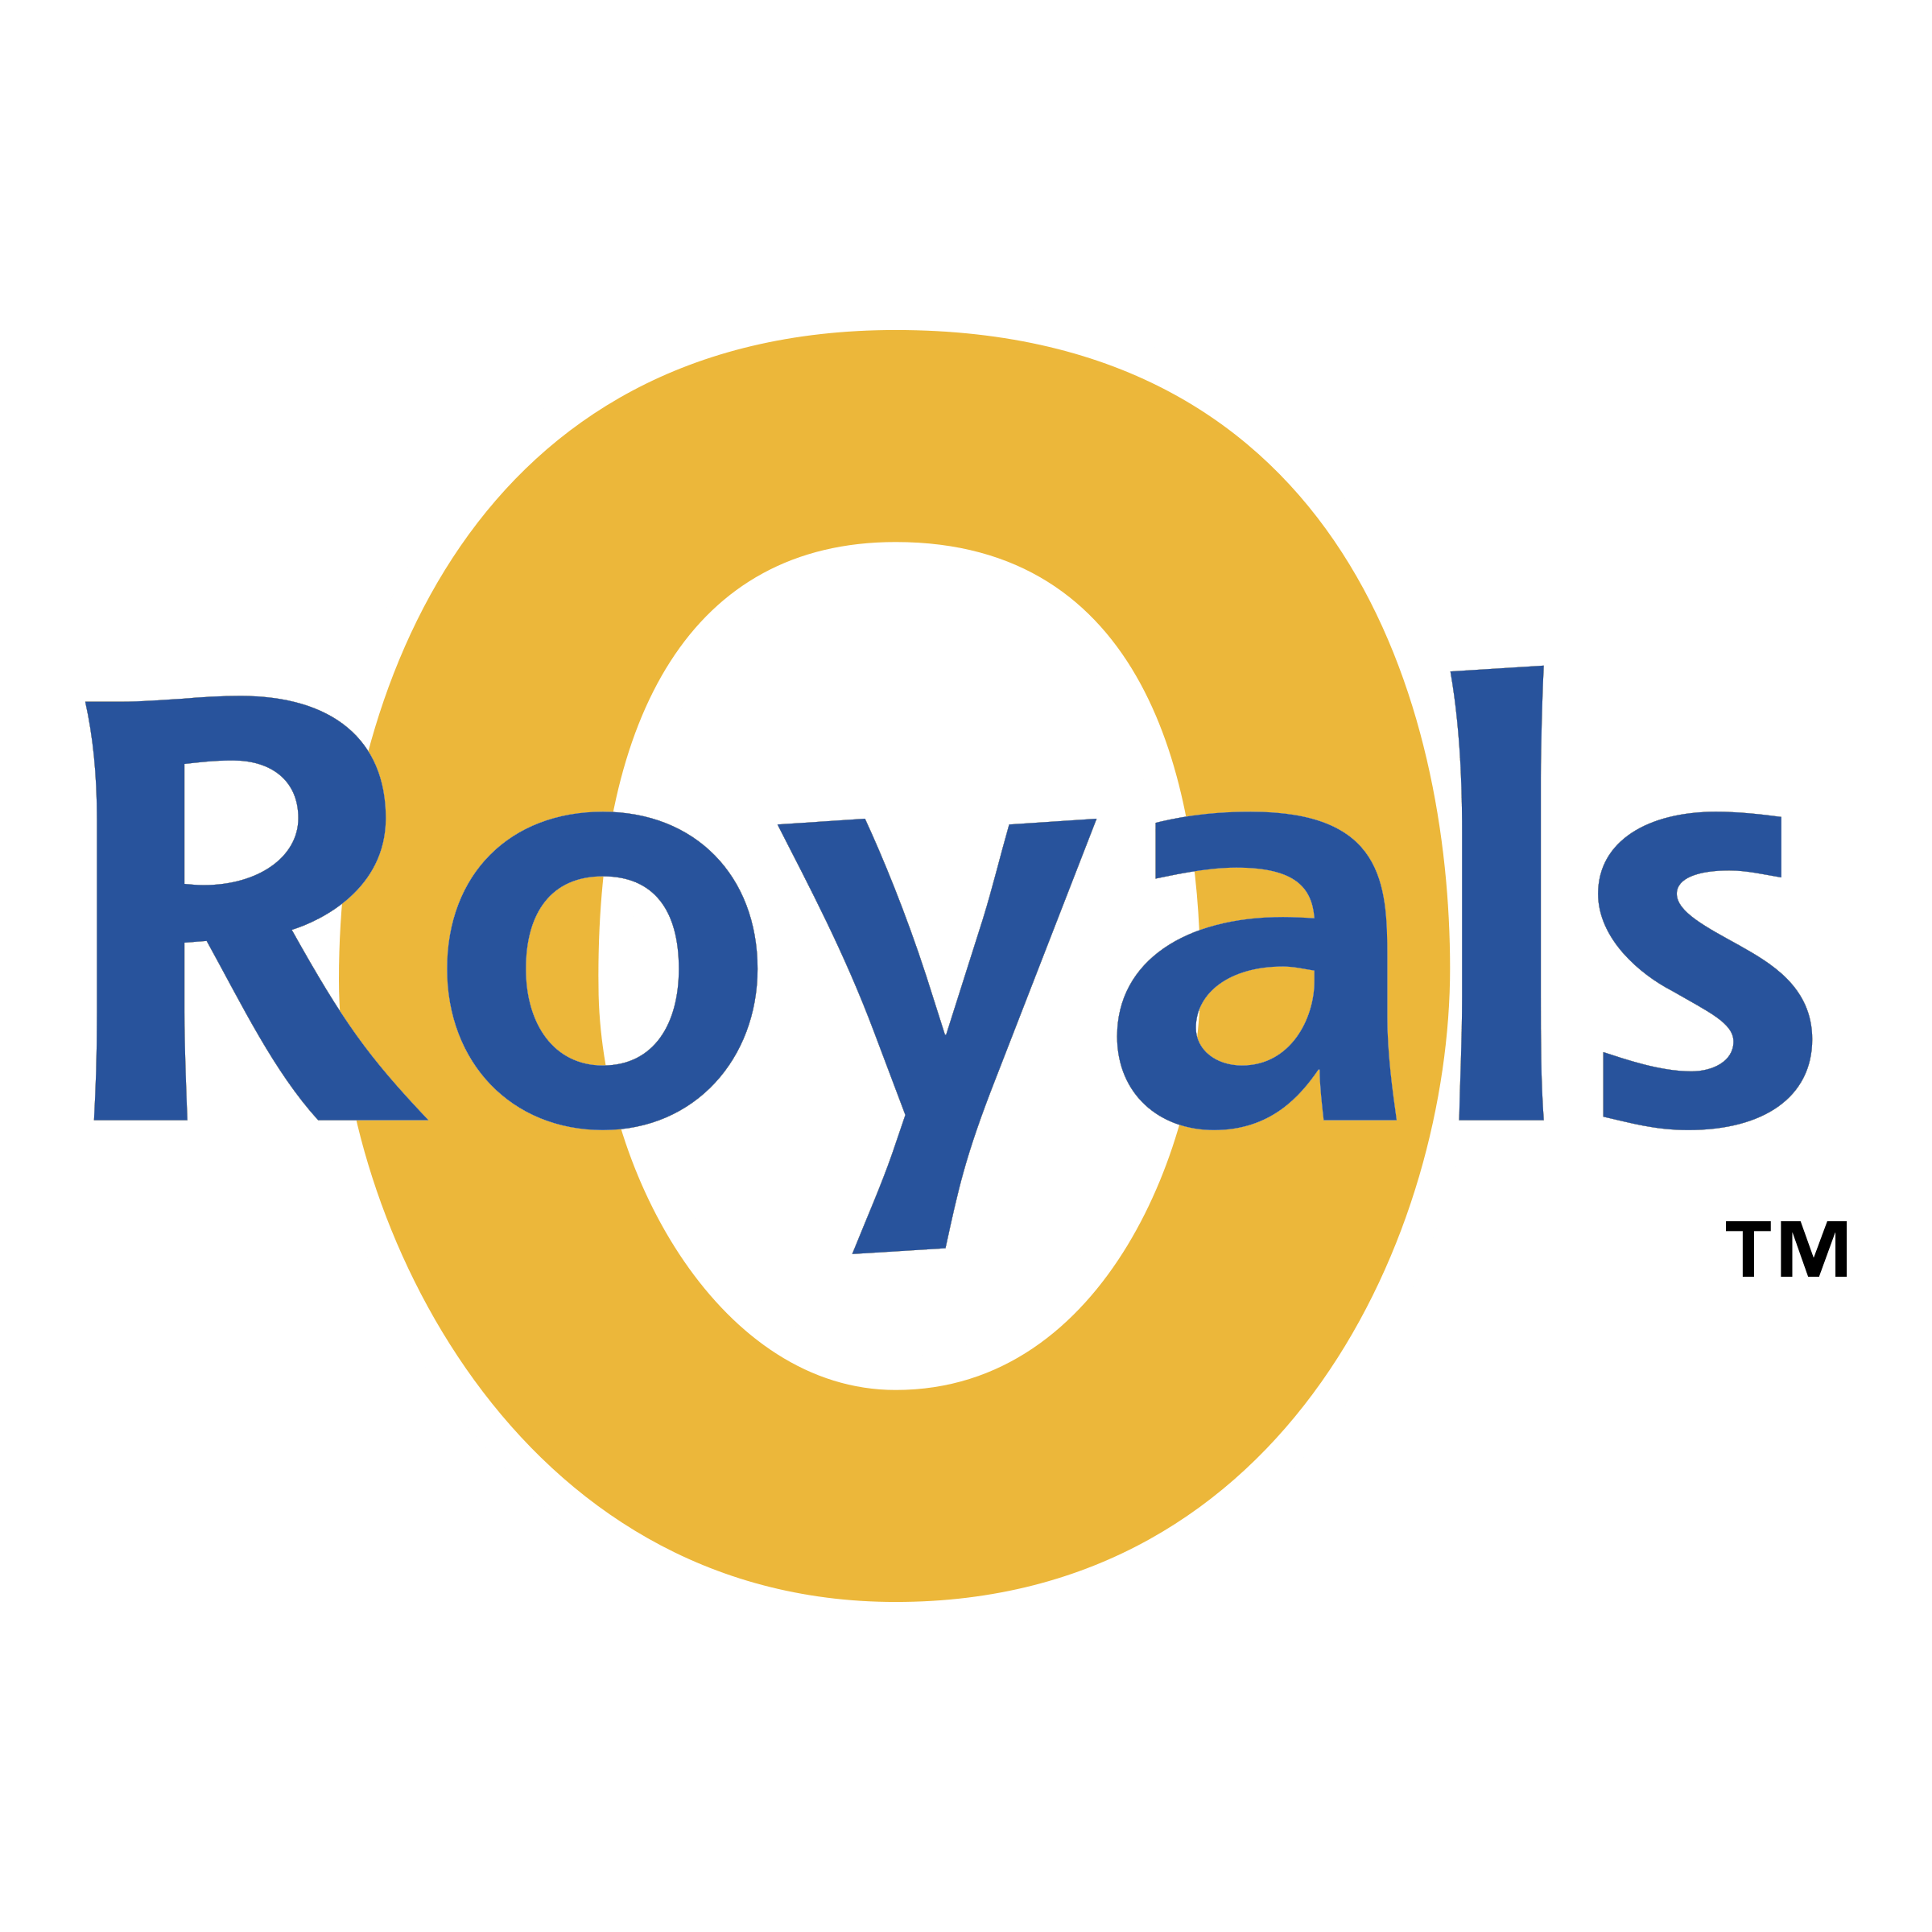 Transparent Royals Logo - Omaha Royals Logo PNG Transparent & SVG Vector - Freebie Supply